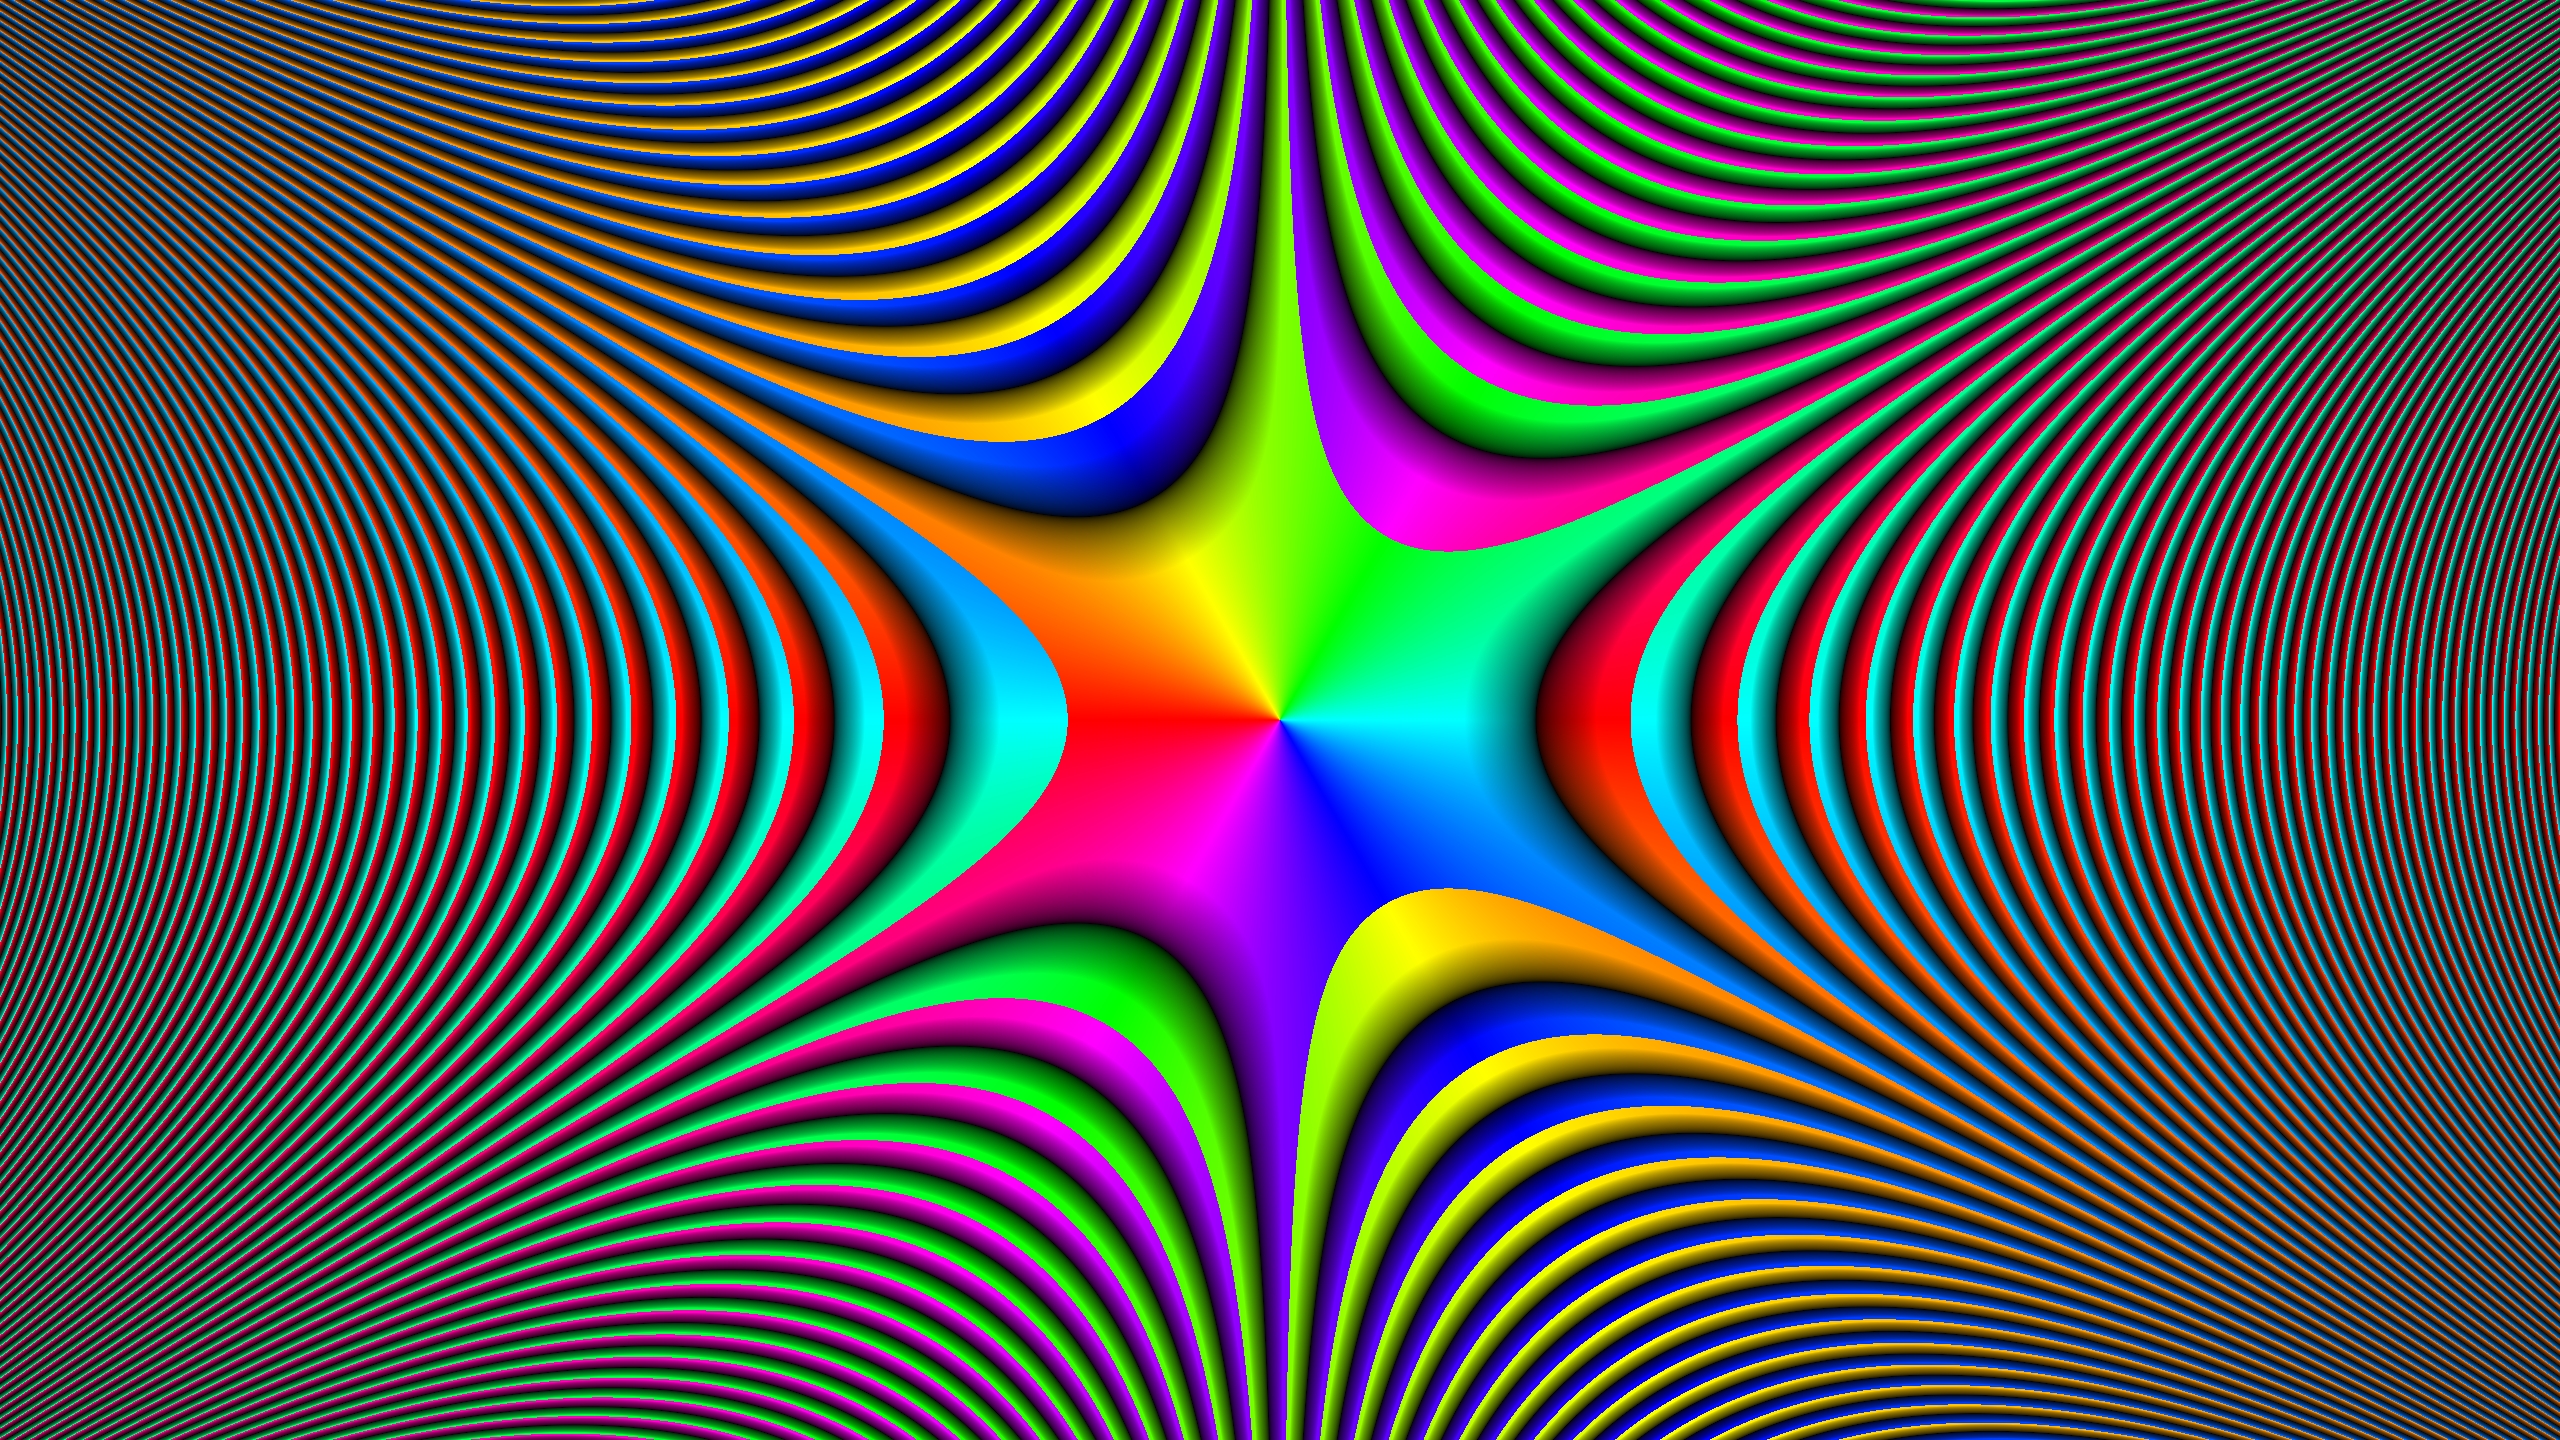 optical illusion wallpaper hd,fractal art,psychedelic art,line,pattern,symmetry